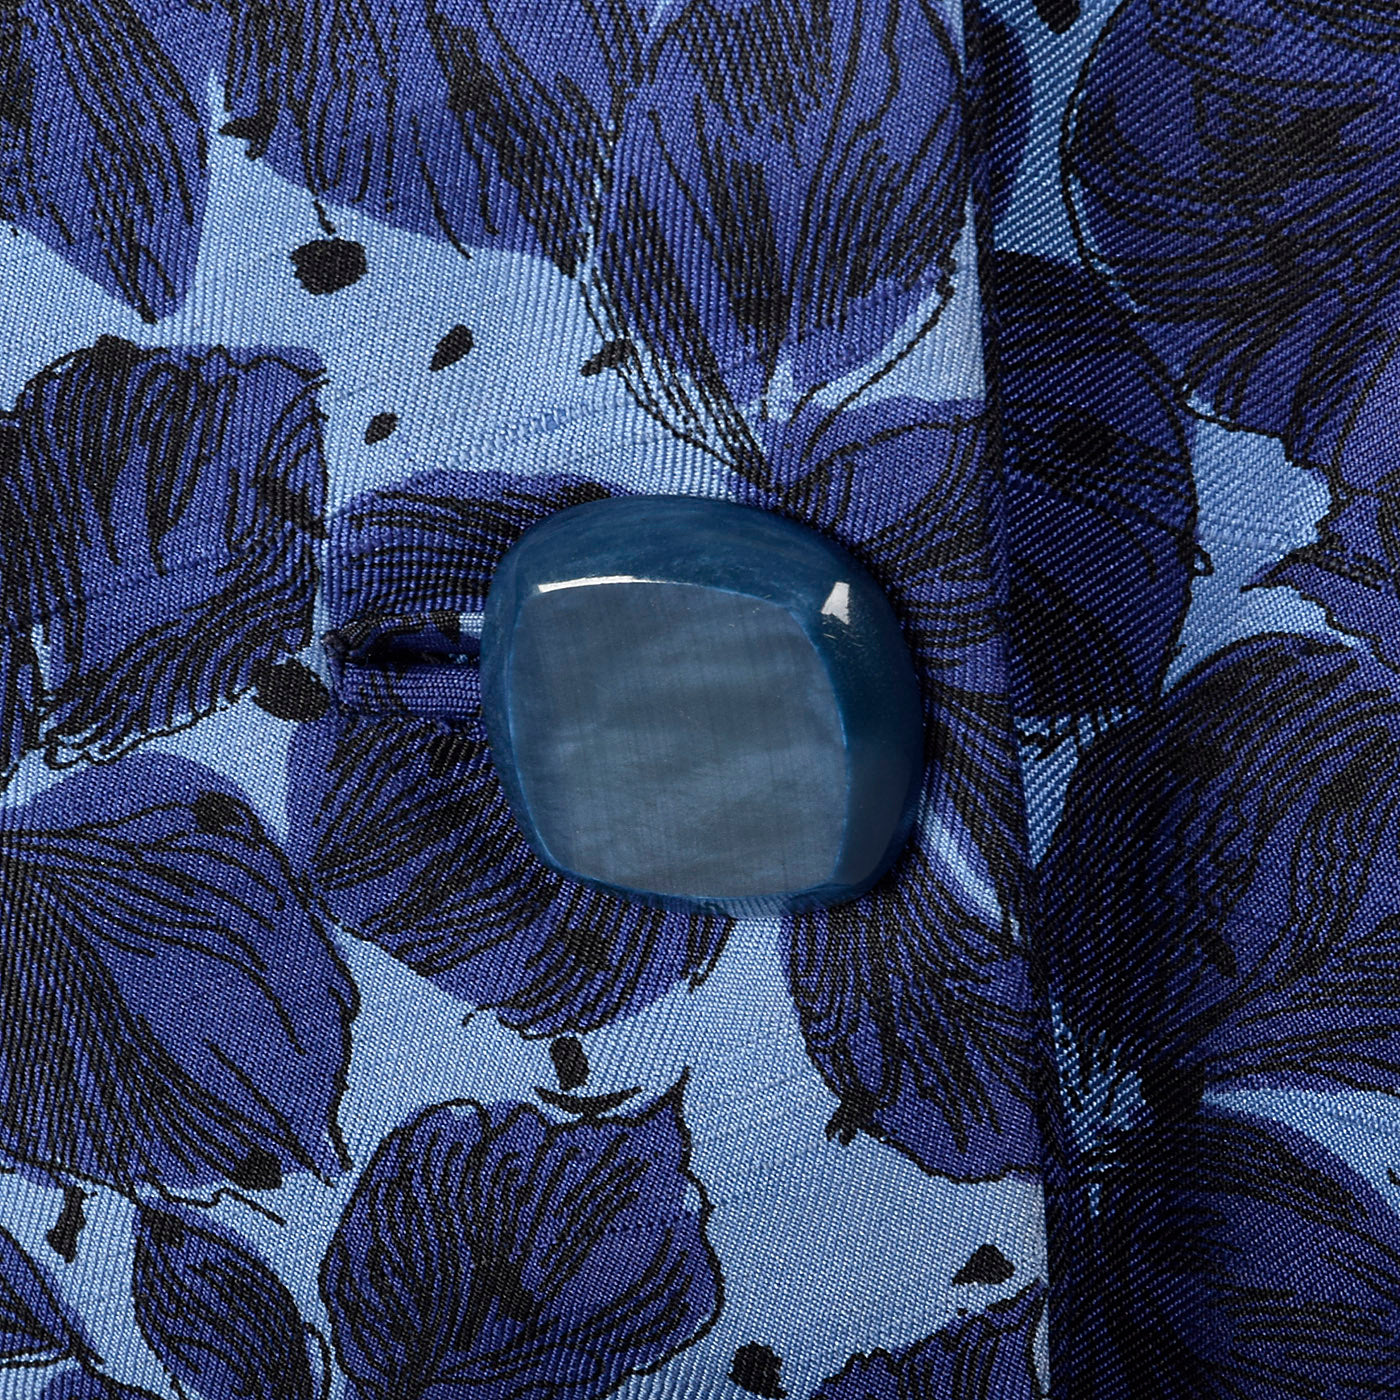 1950s Blue Floral Print Silk Dress